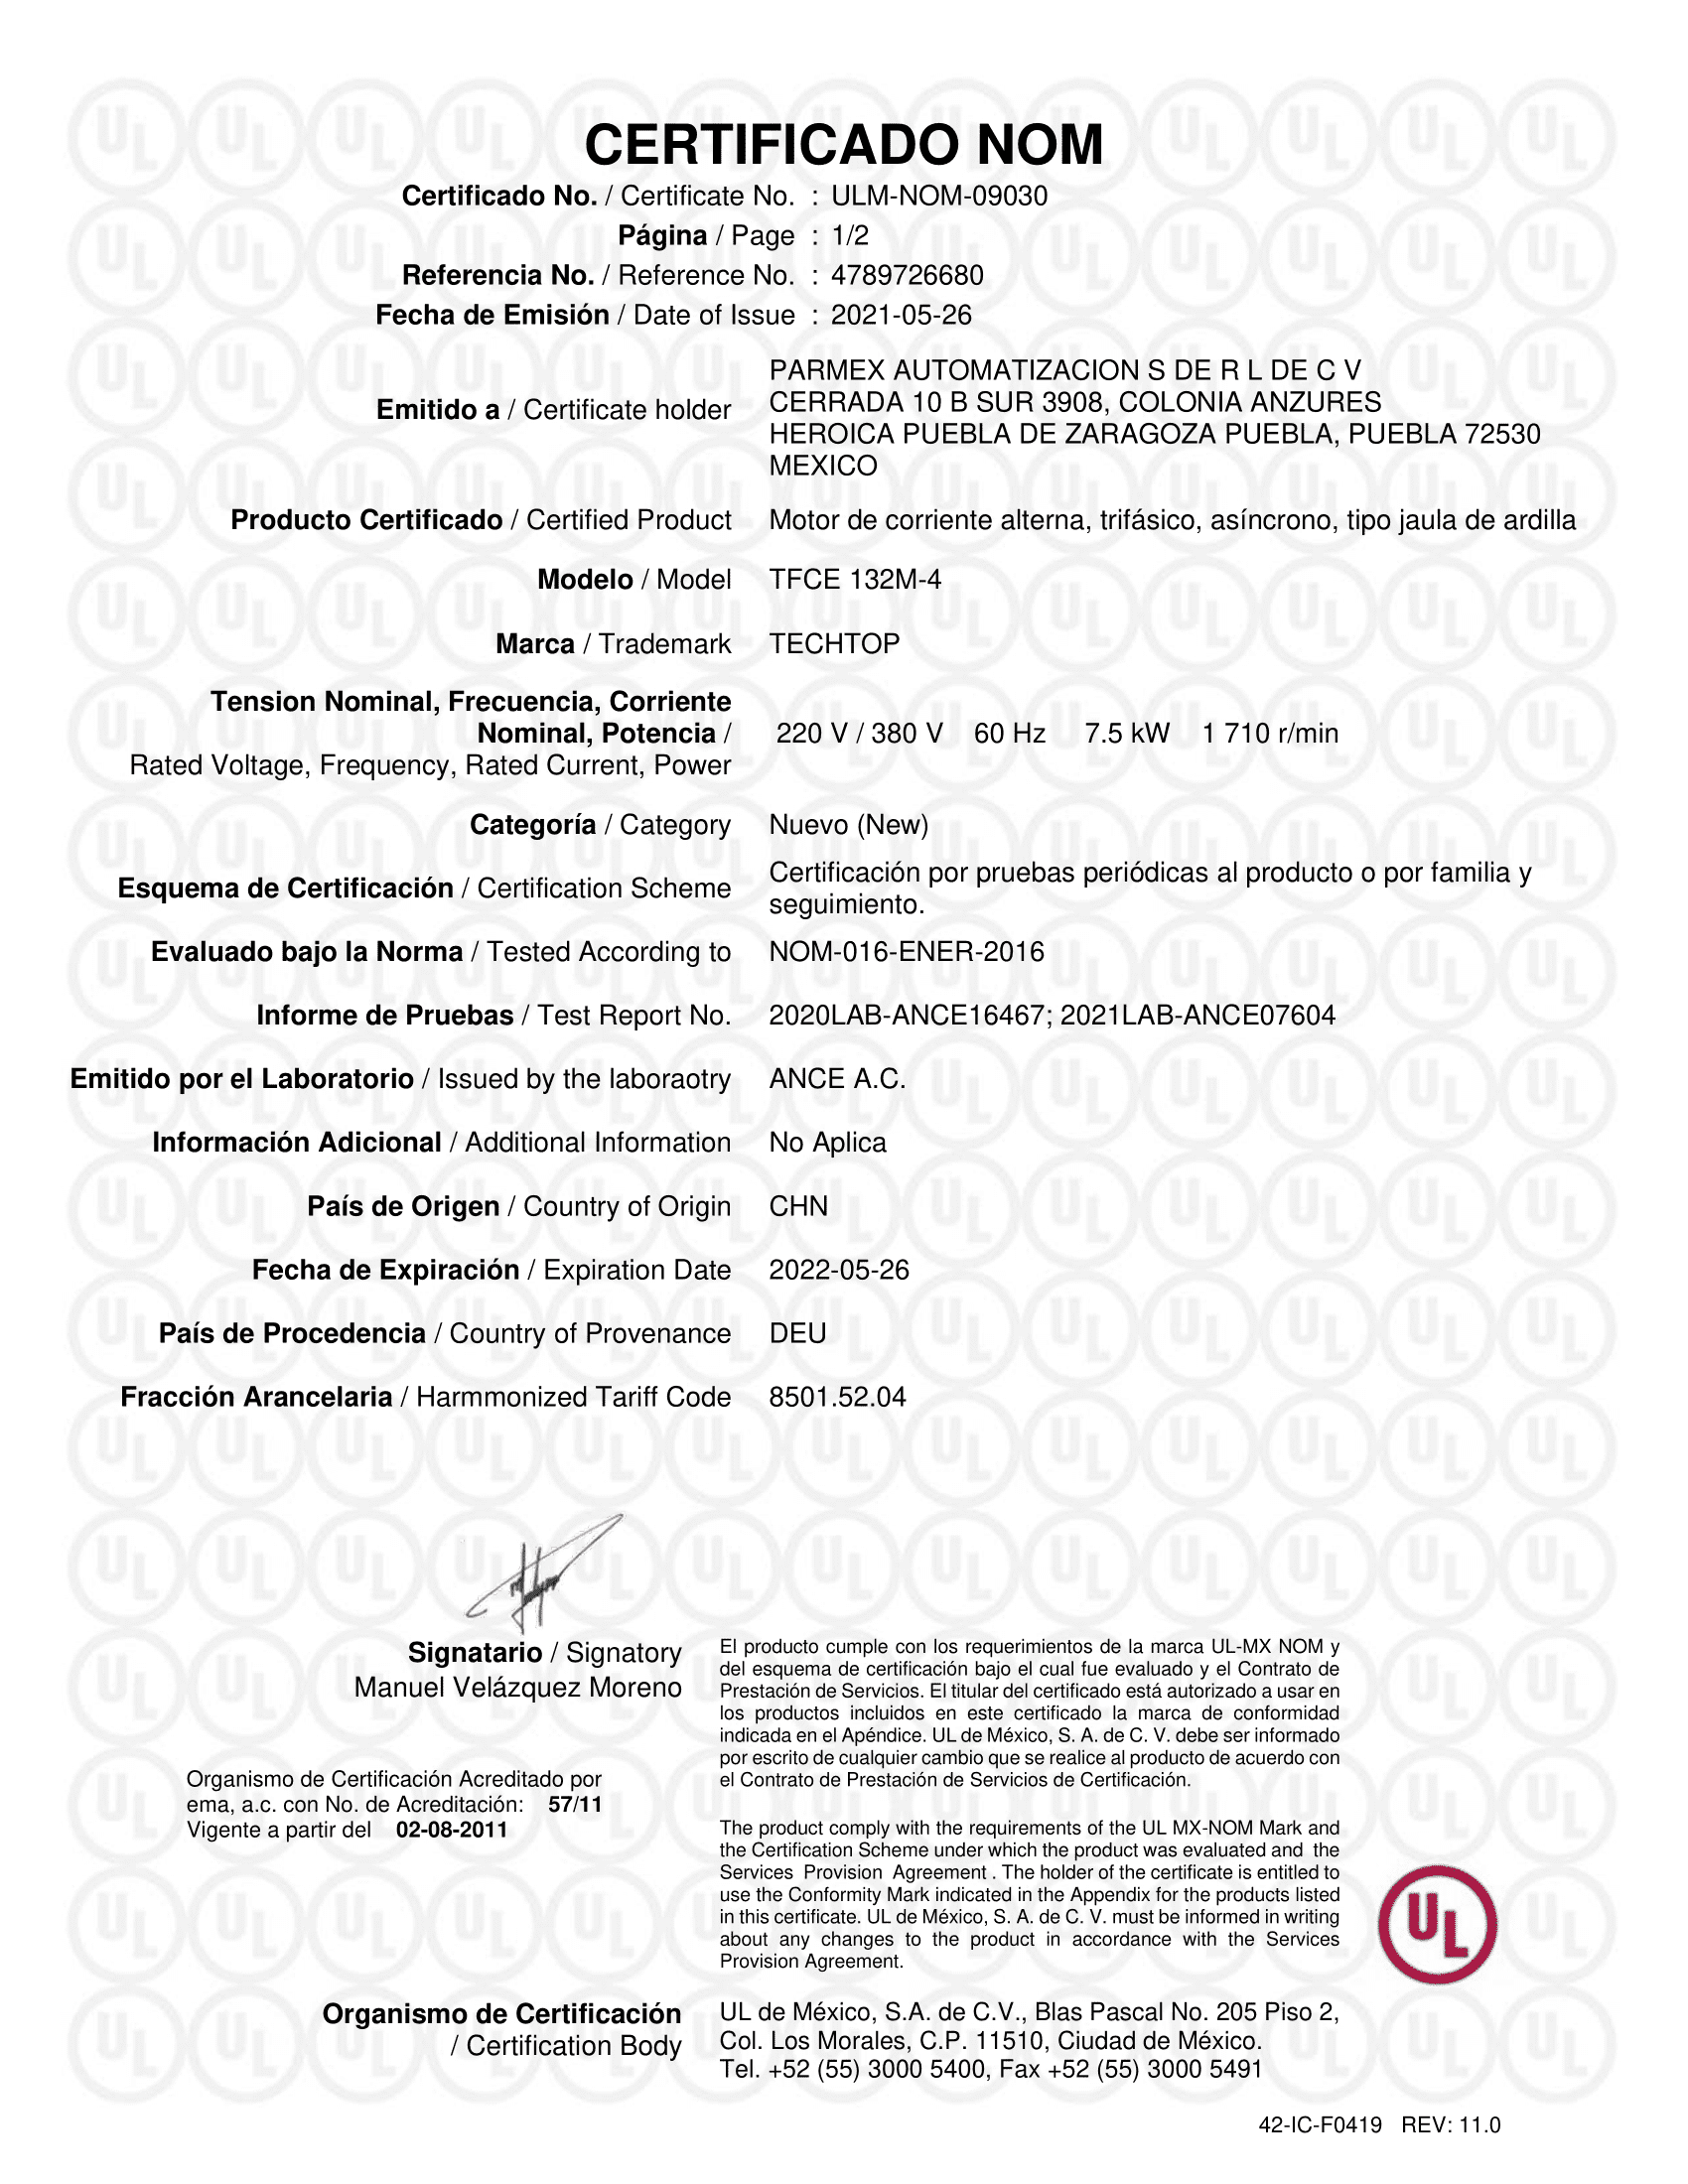 NOM Certificate